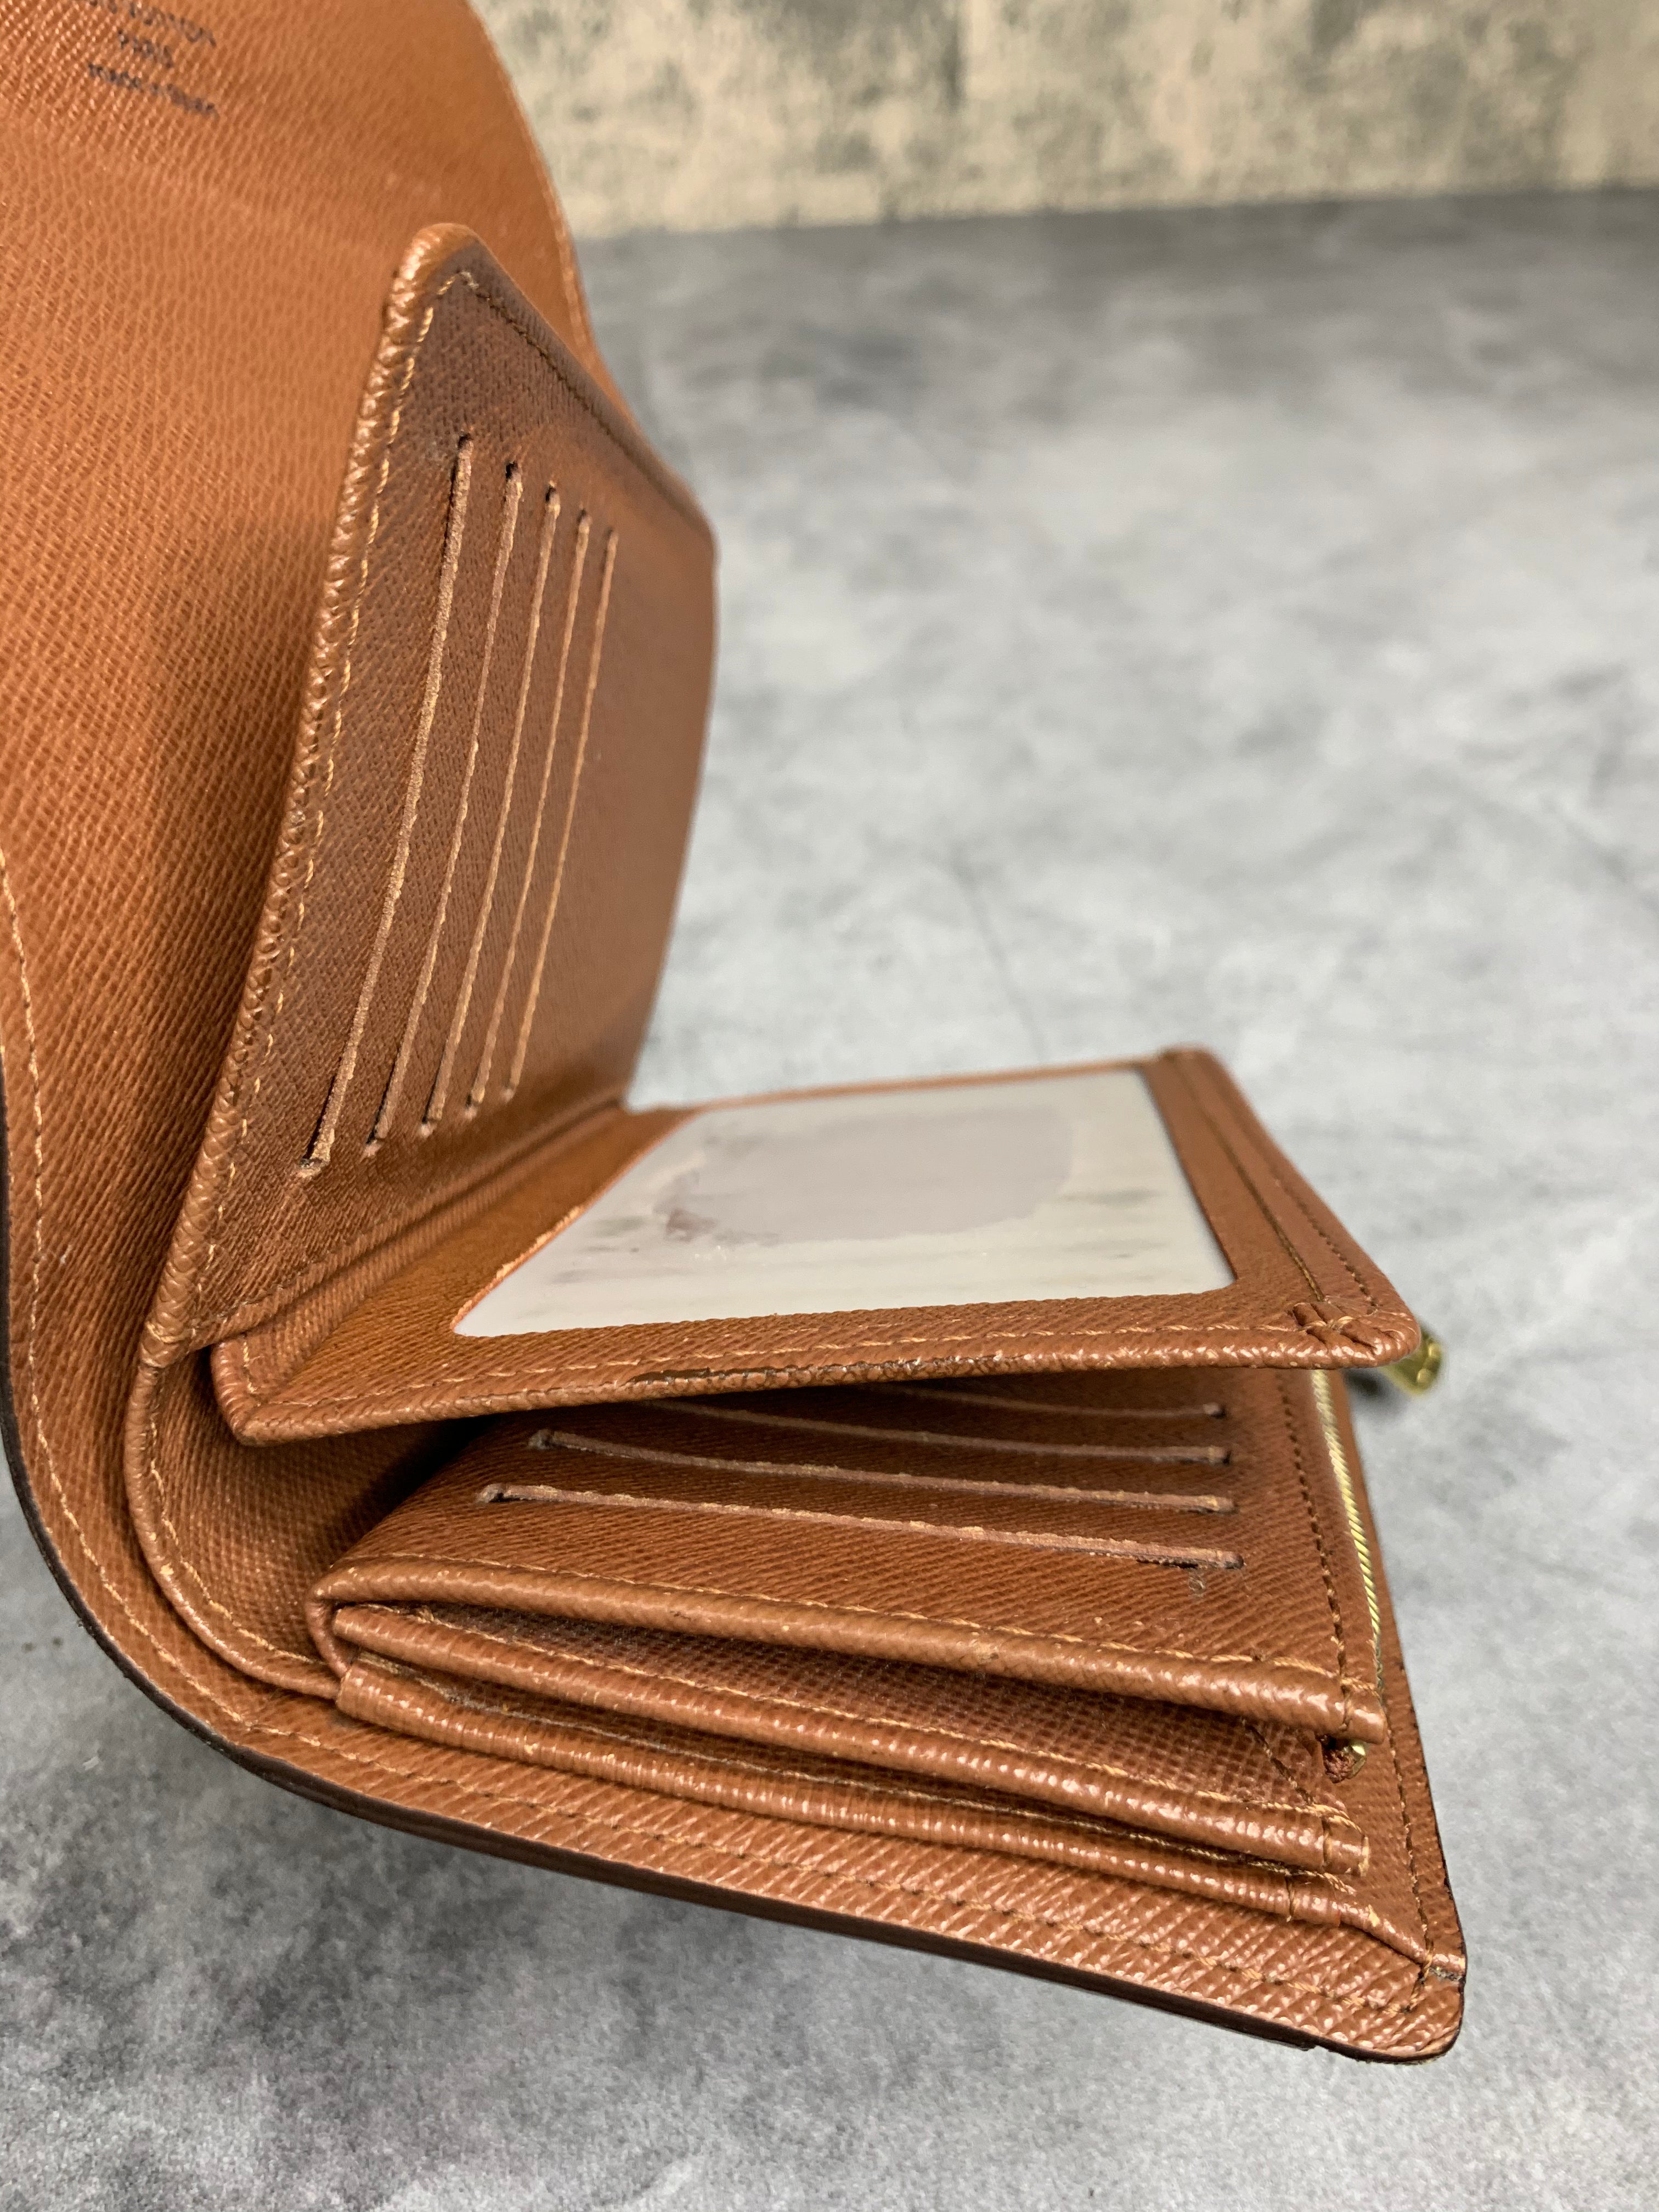 Louis Vuitton Alexandra Leather Wallet